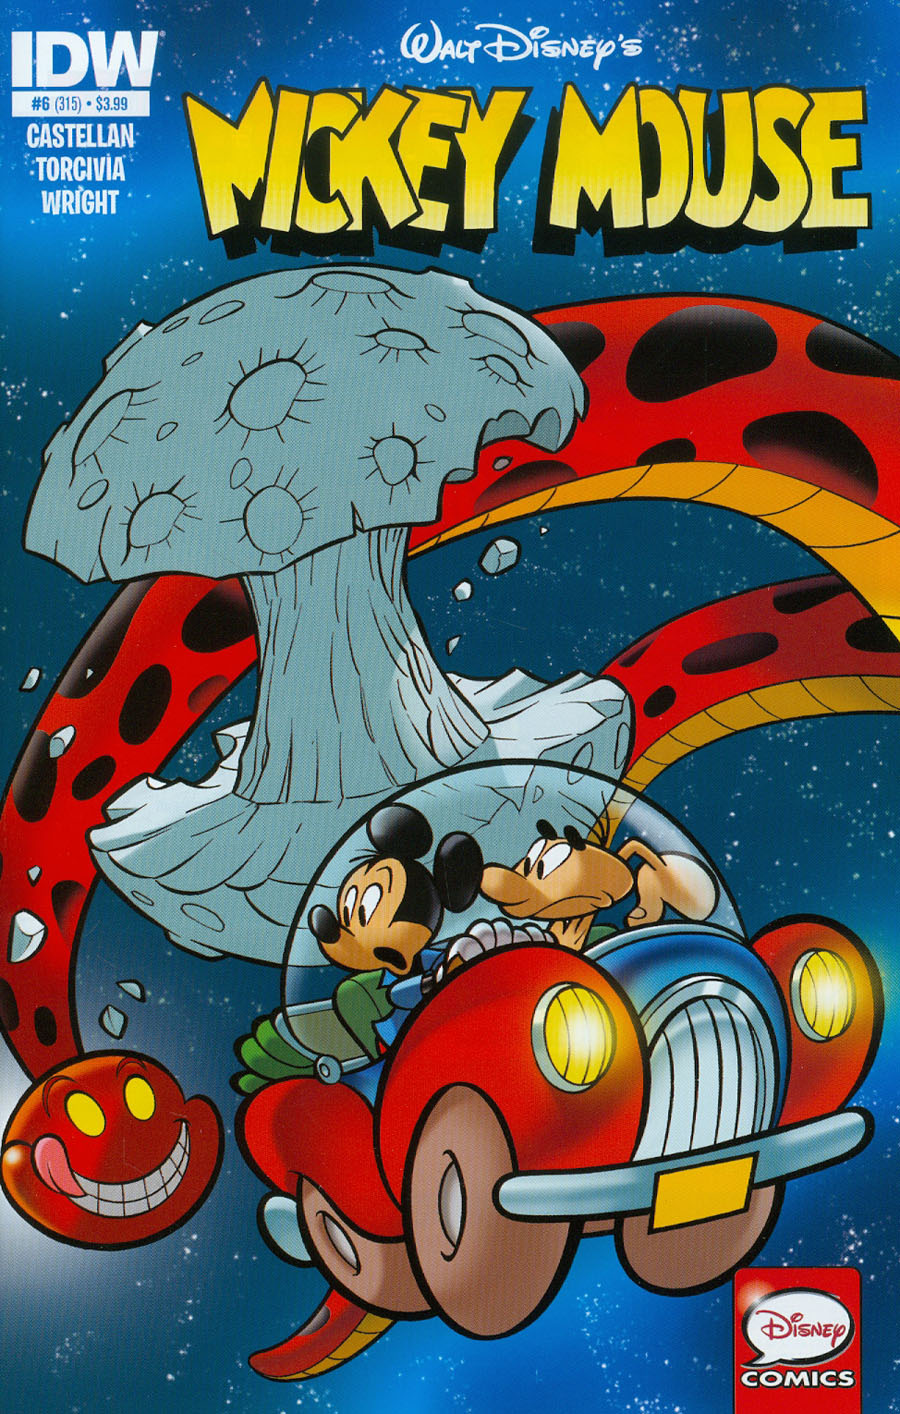 Mickey Mouse Vol 2 #6 Cover A Regular Andrea Castellan Cover